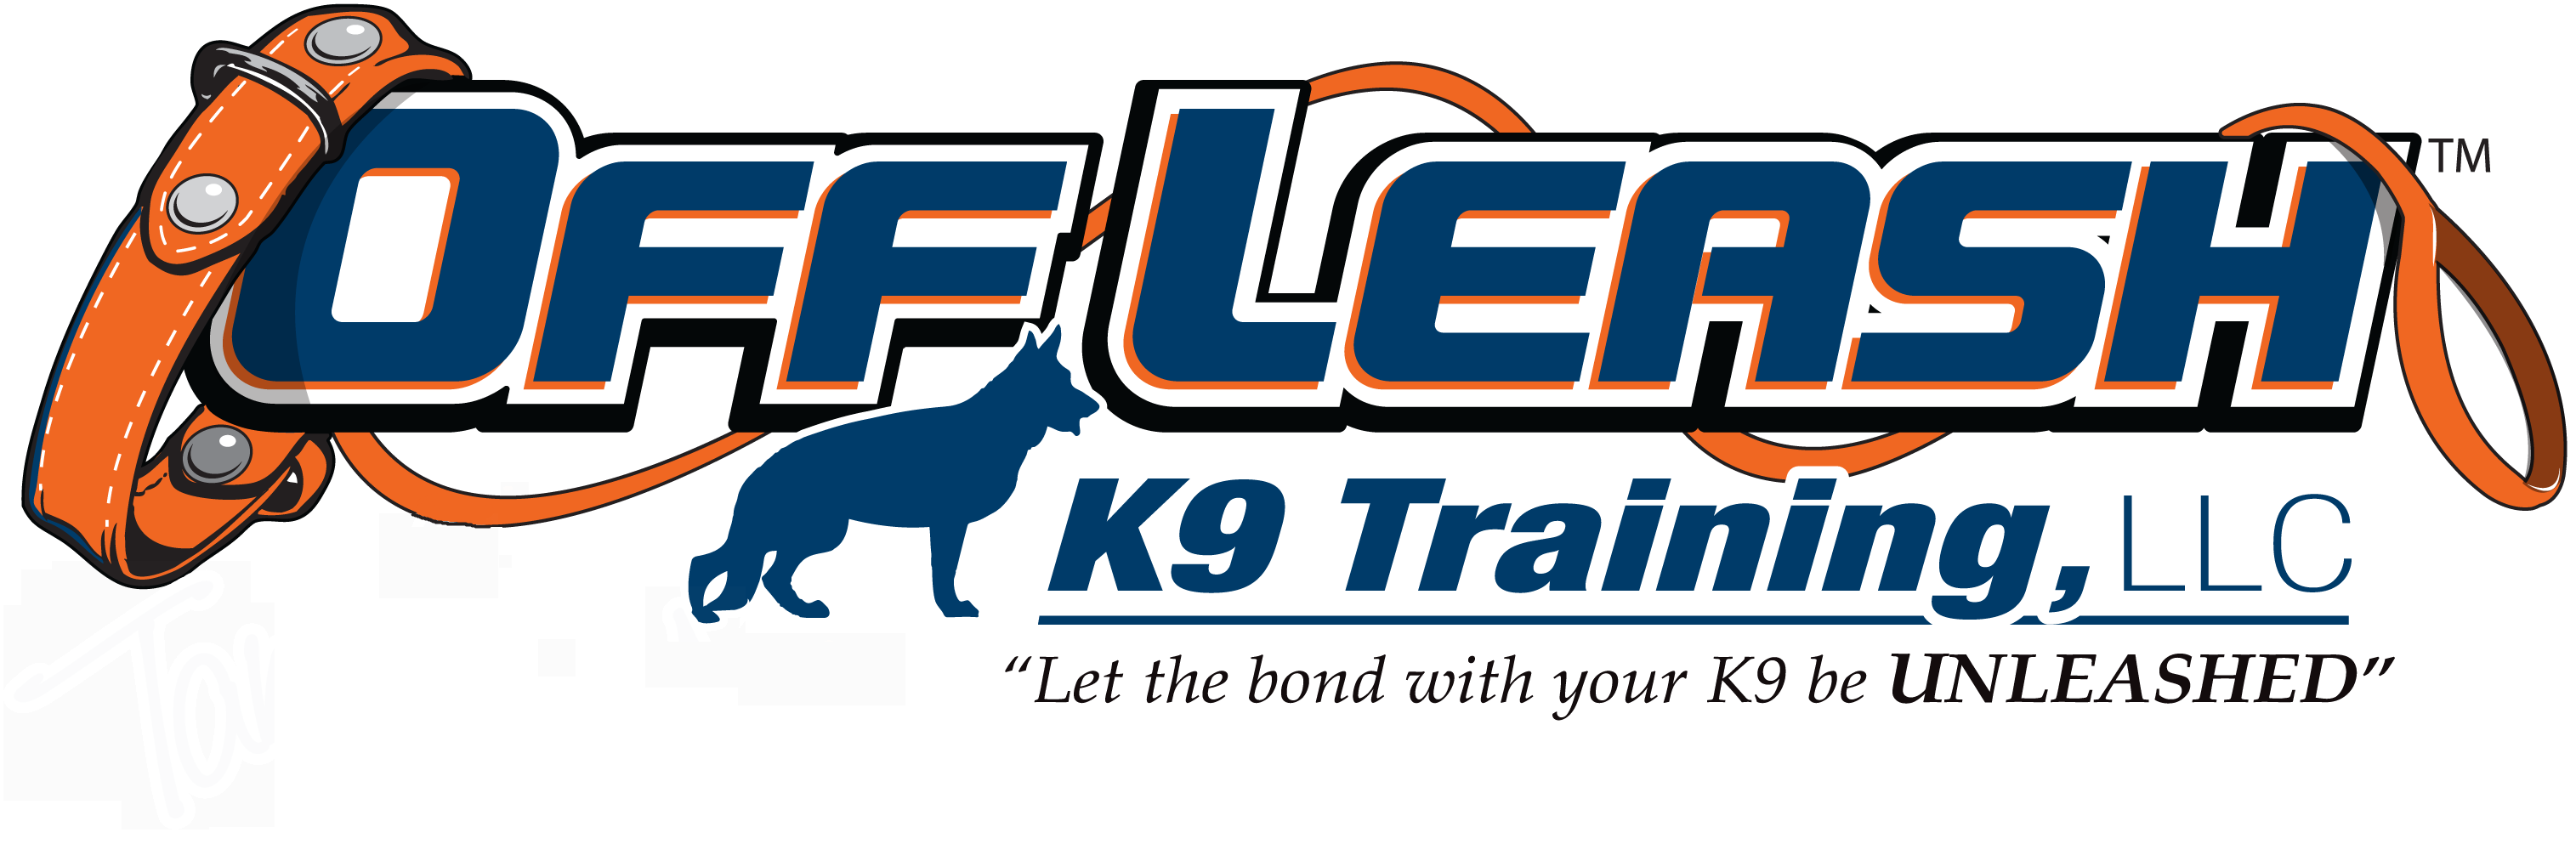 Offleash K9 Celebrity Dog Training